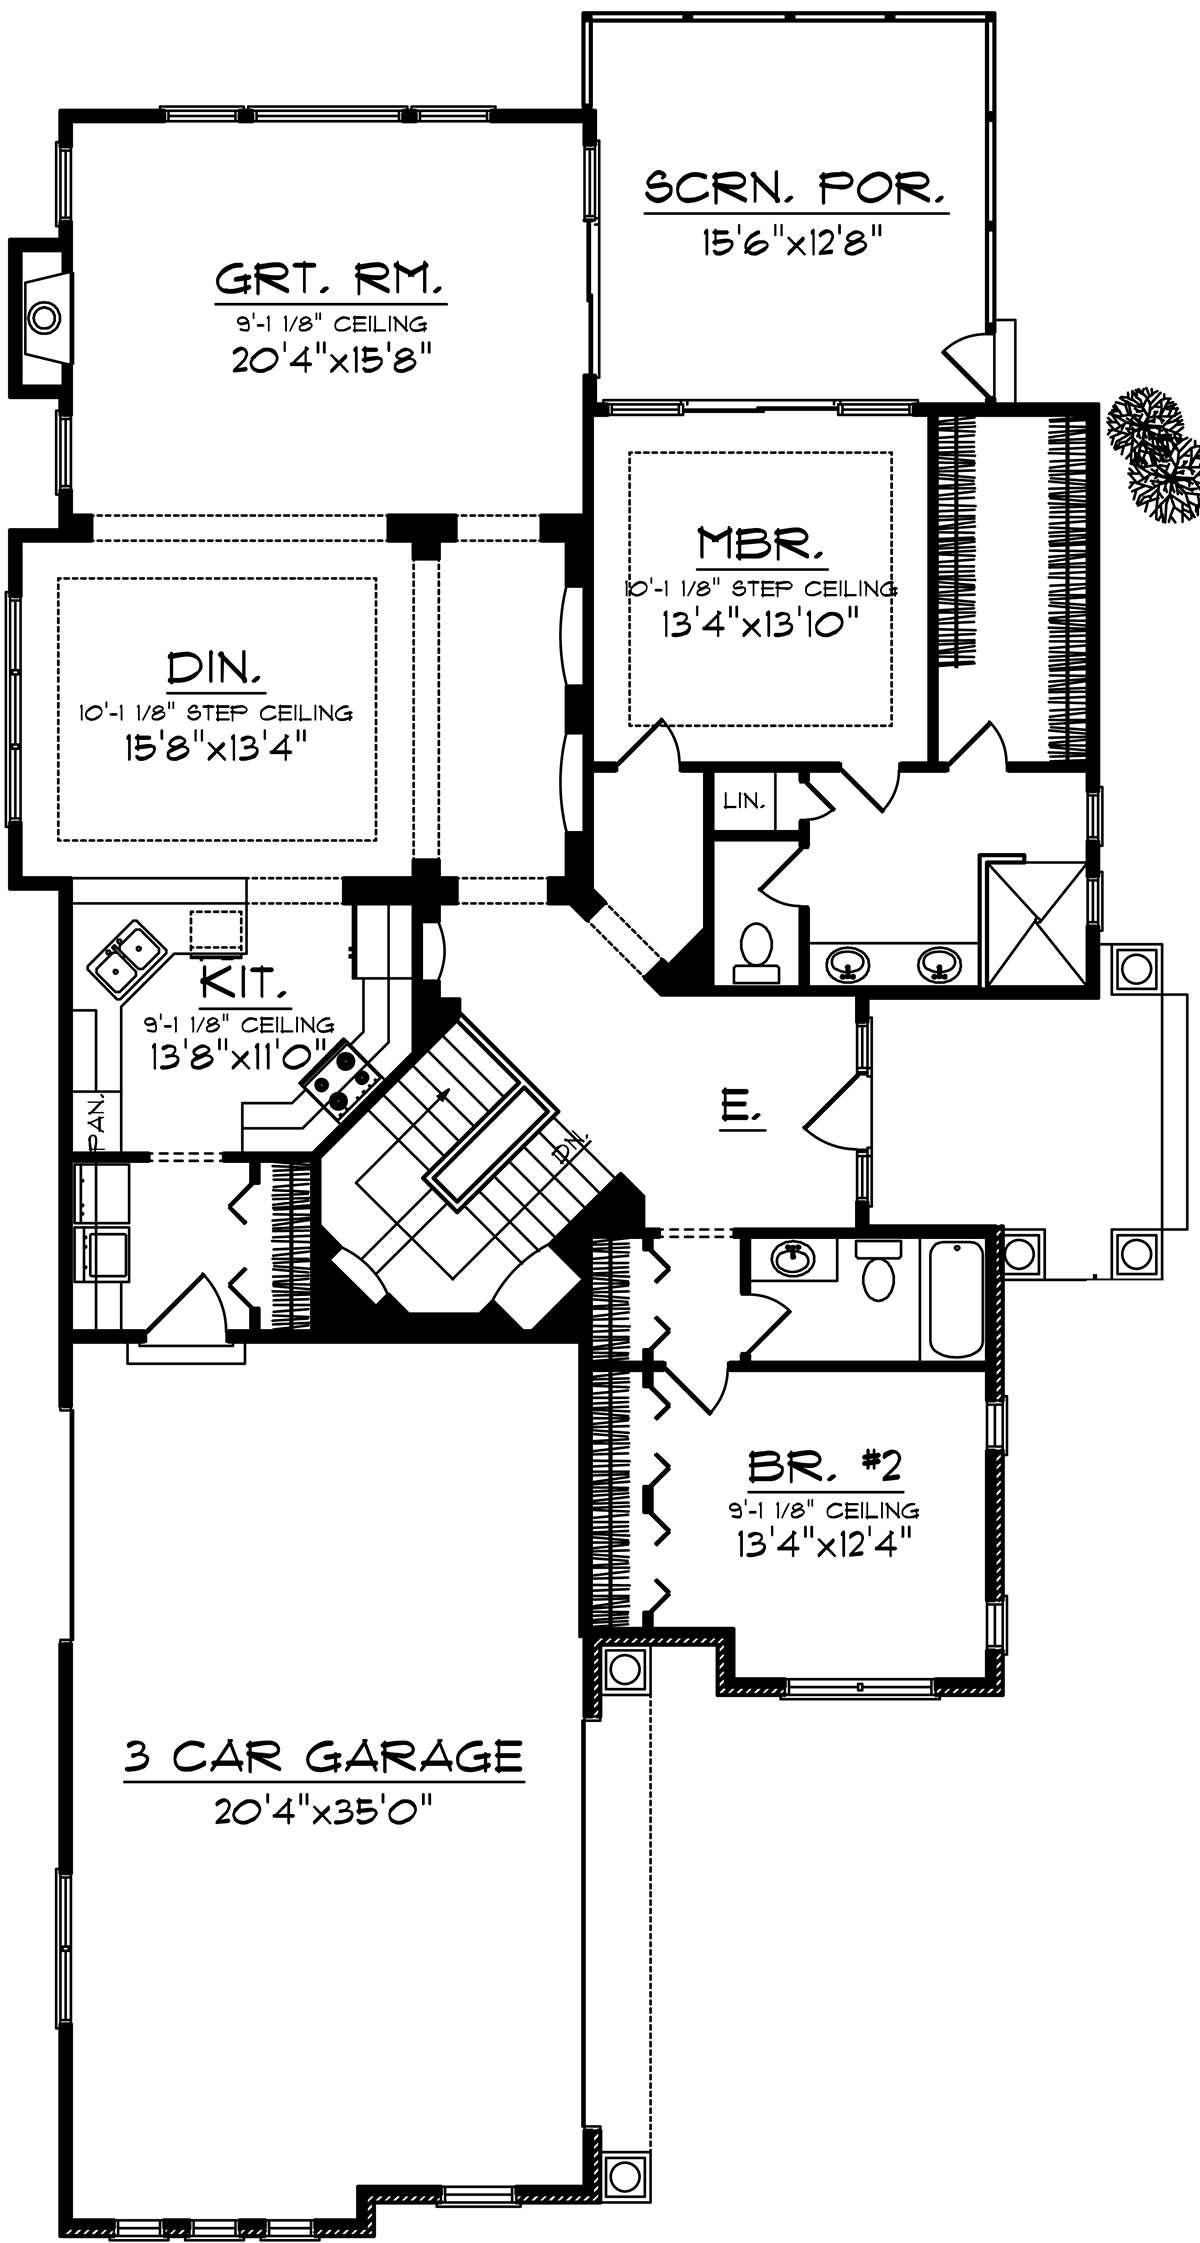 Ranch Plan: 1,902 Square Feet, 2 Bedrooms, 2 Bathrooms - 1020-00289